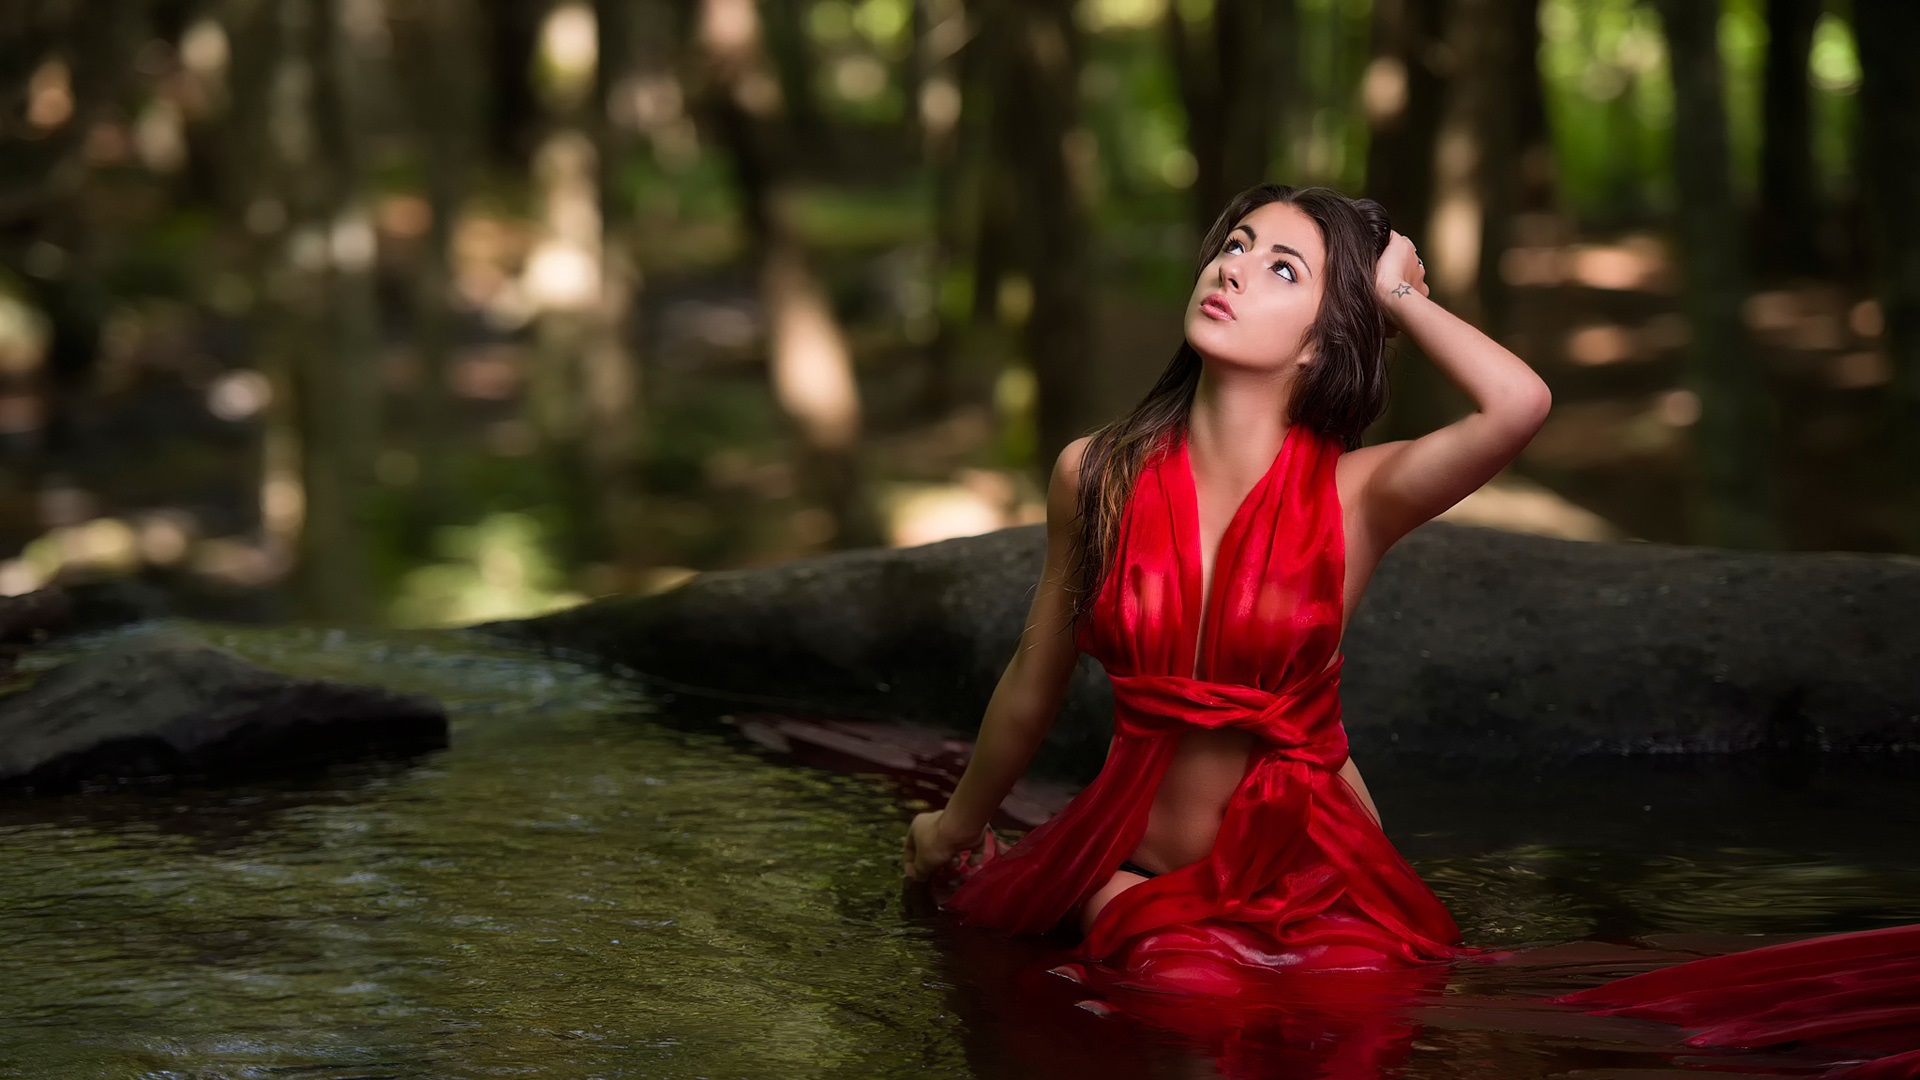 Red-dress-girl-in-water_1920x1080.jpg